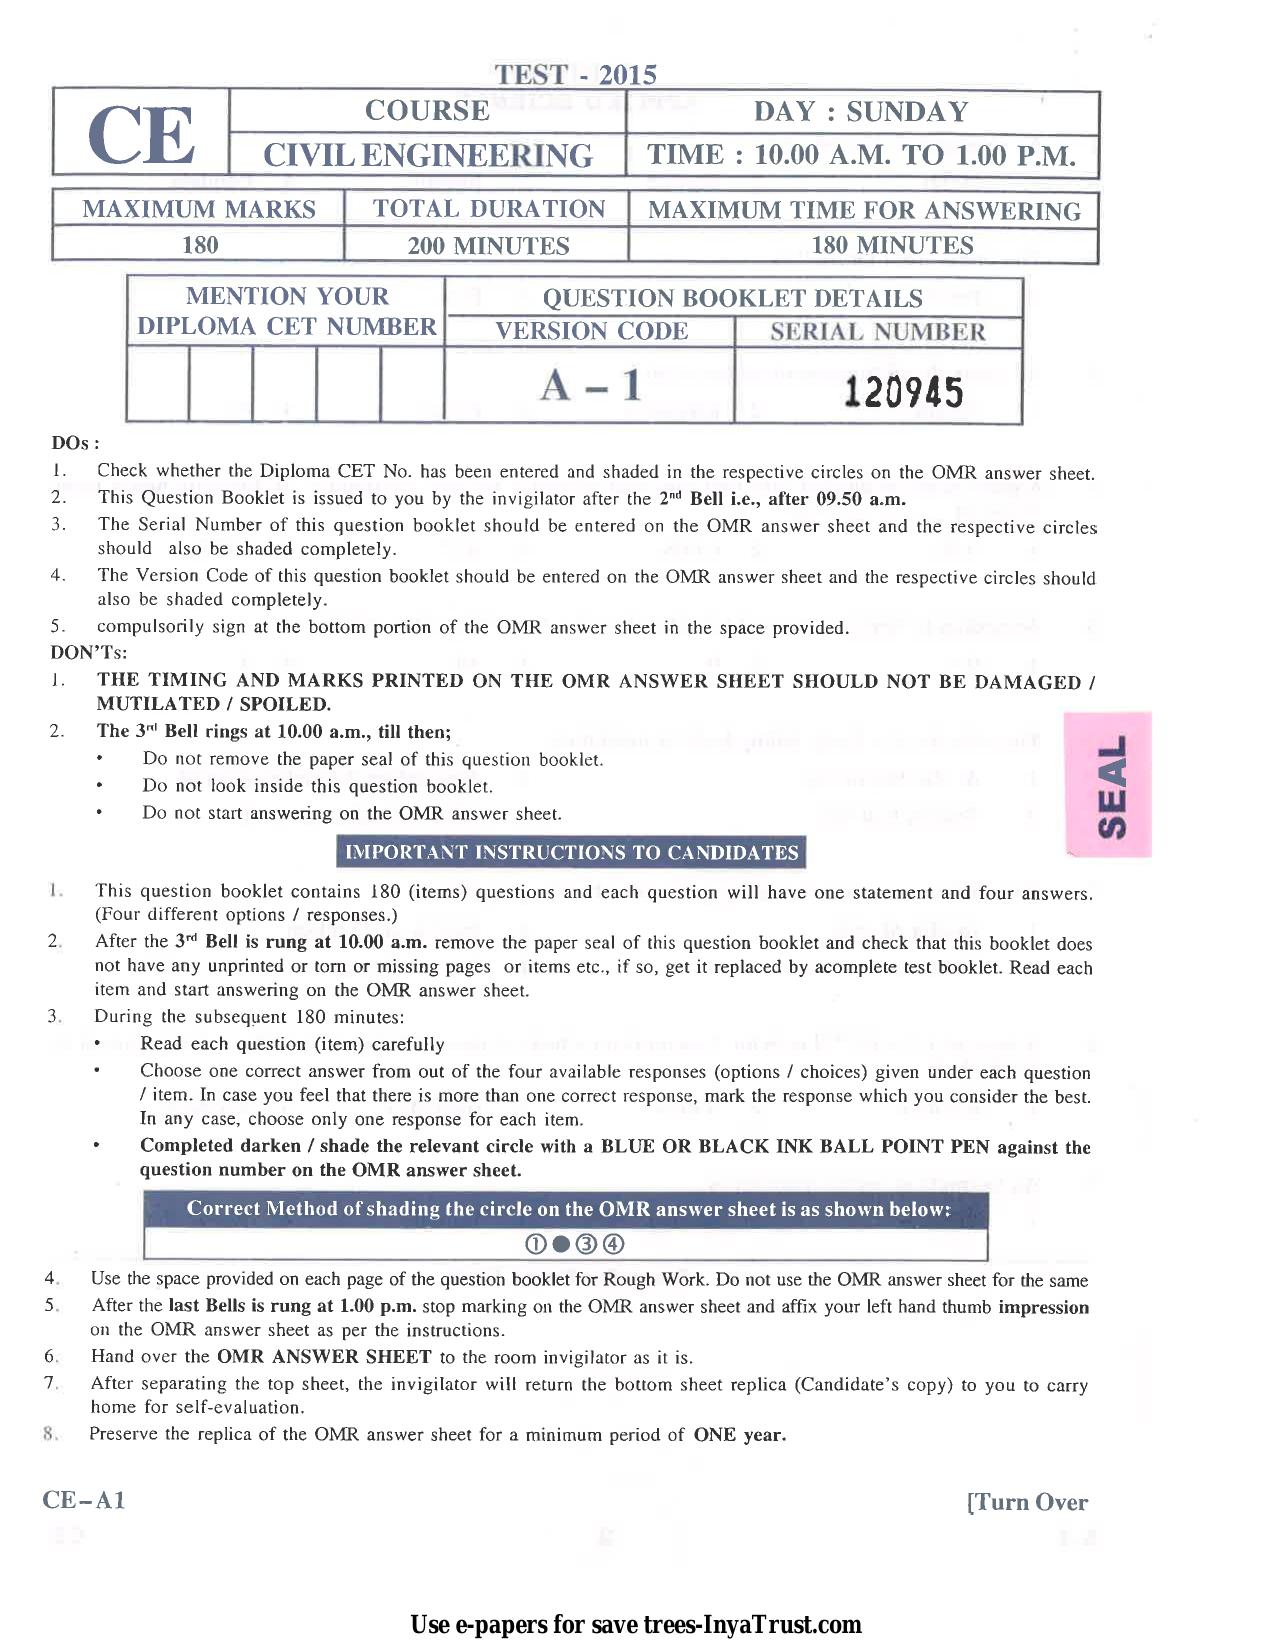 Karnataka Diploma CET- 2015 Civil Engineering Question Paper - Page 1